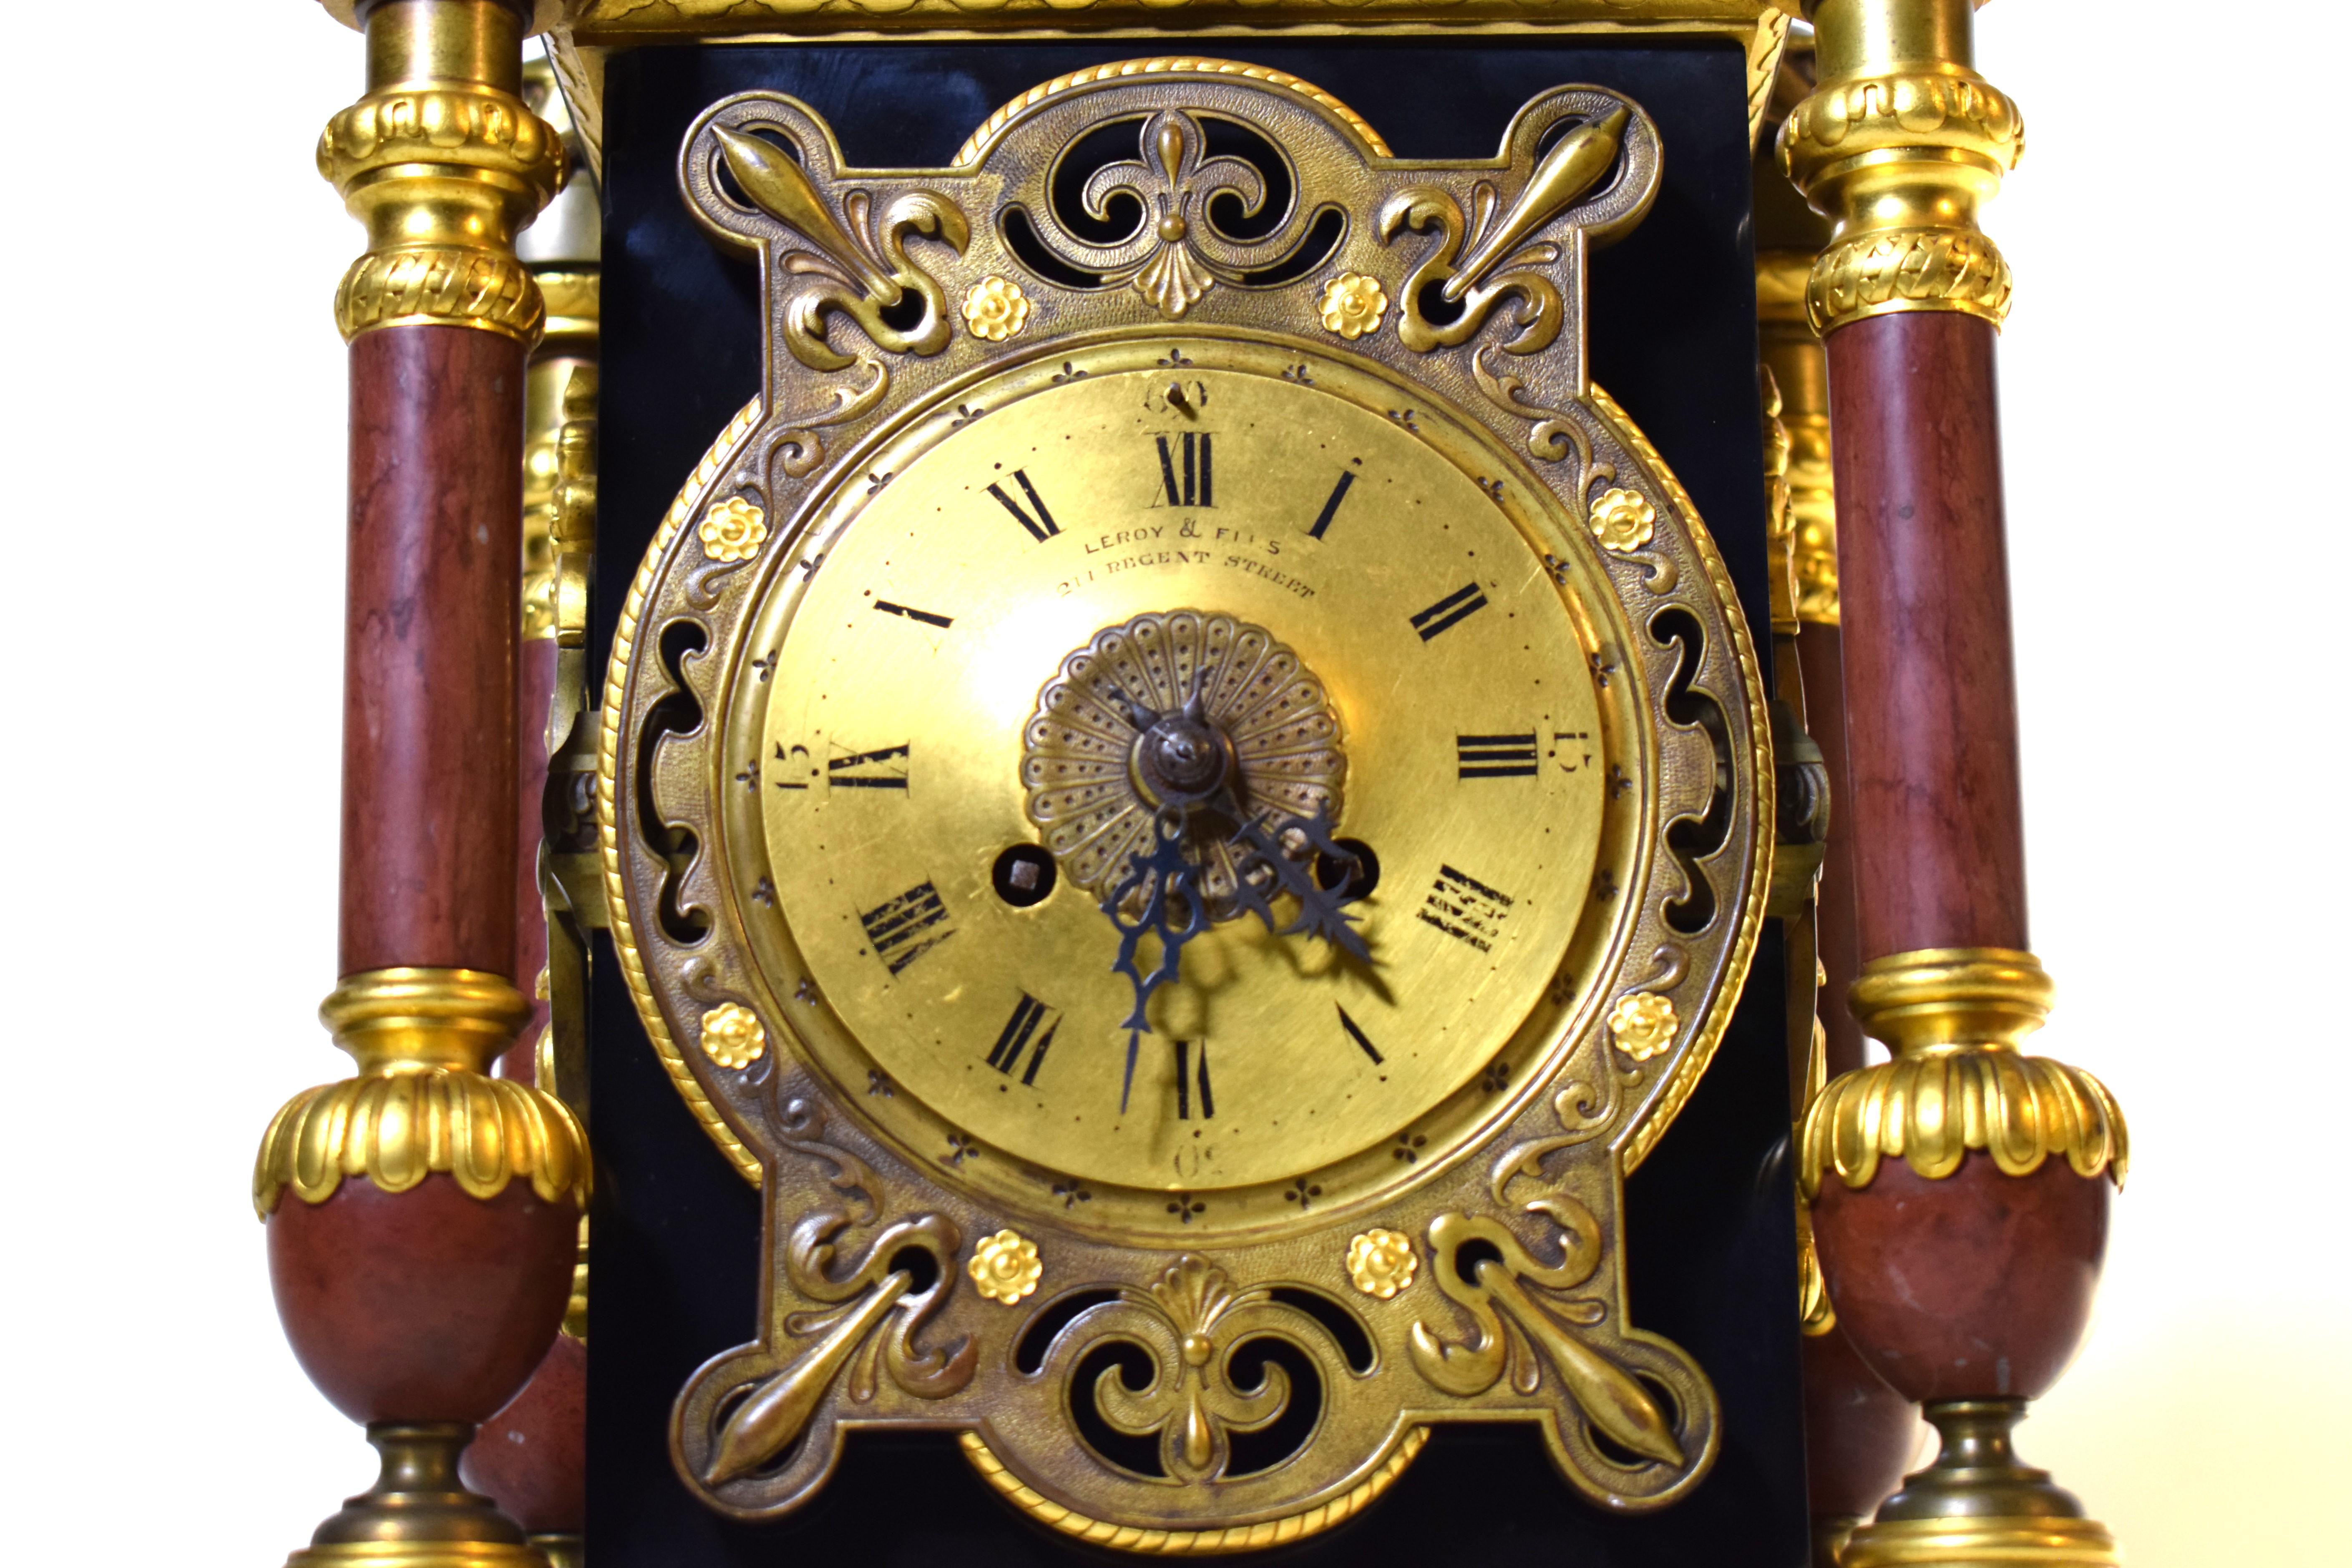 Partial vergoldete Uhr von Le Roy & Fils im Barockstil, Revival im Angebot 8